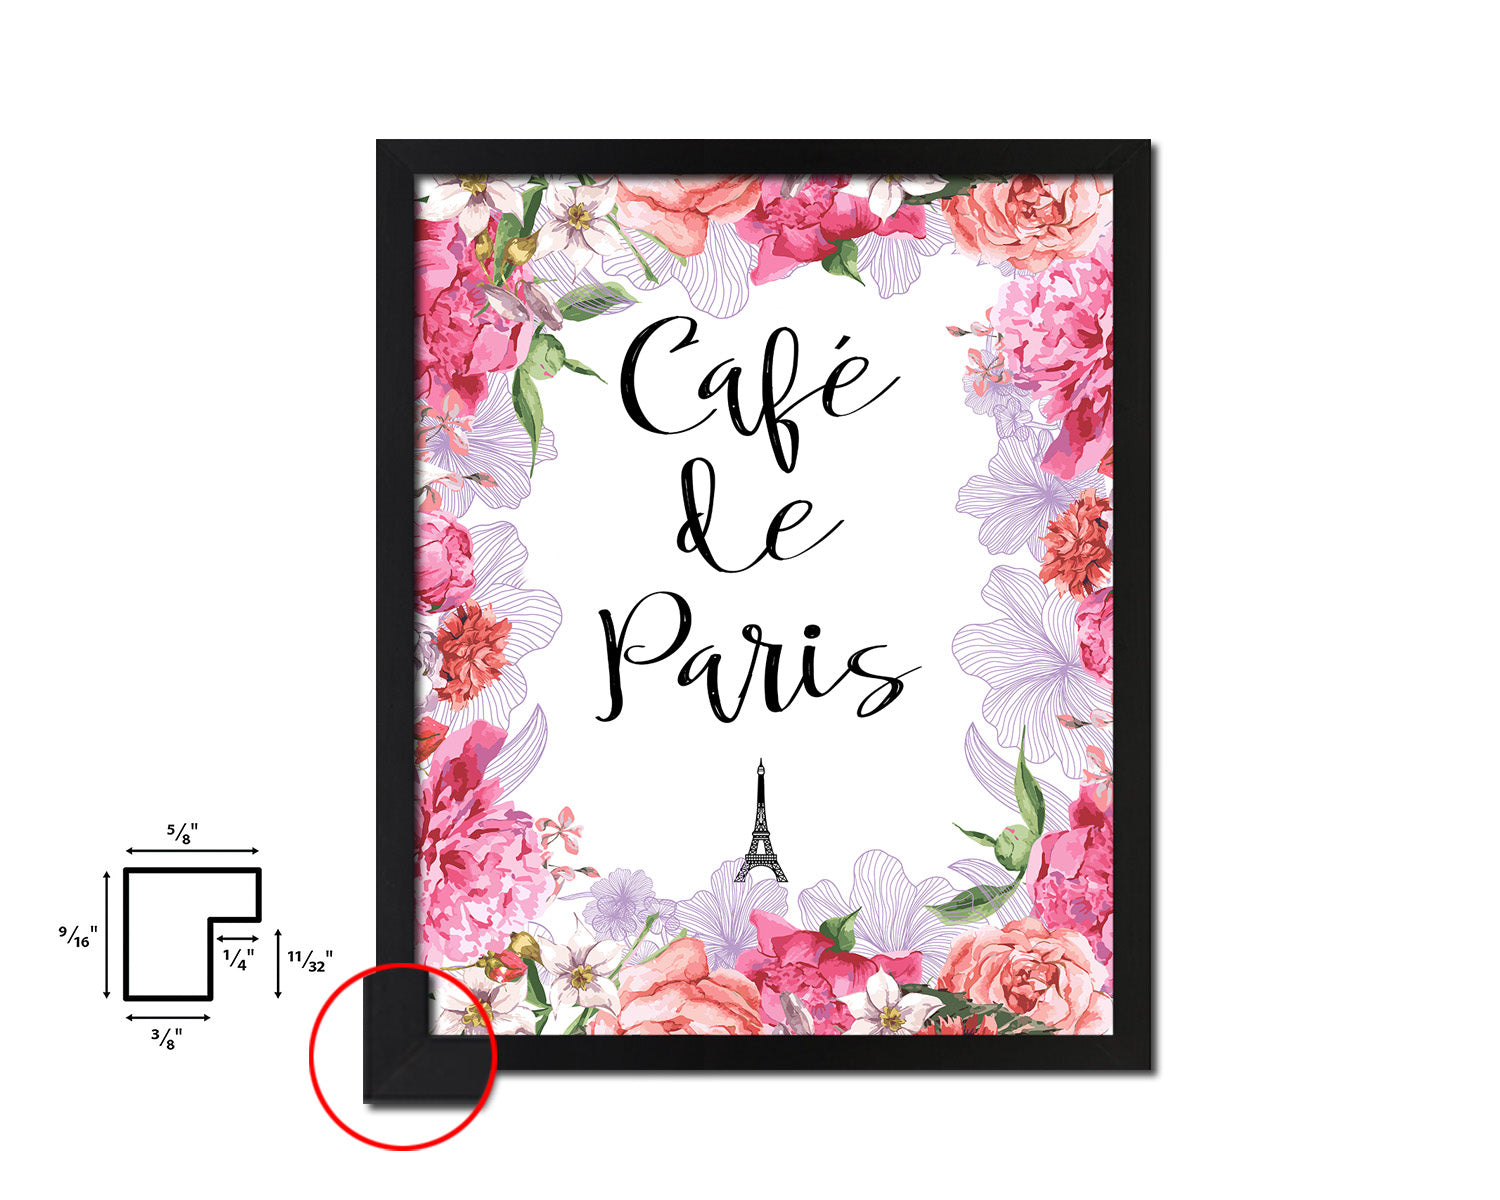 Cafe De Paris Quote Framed Artwork Print Wall Decor Art Gifts